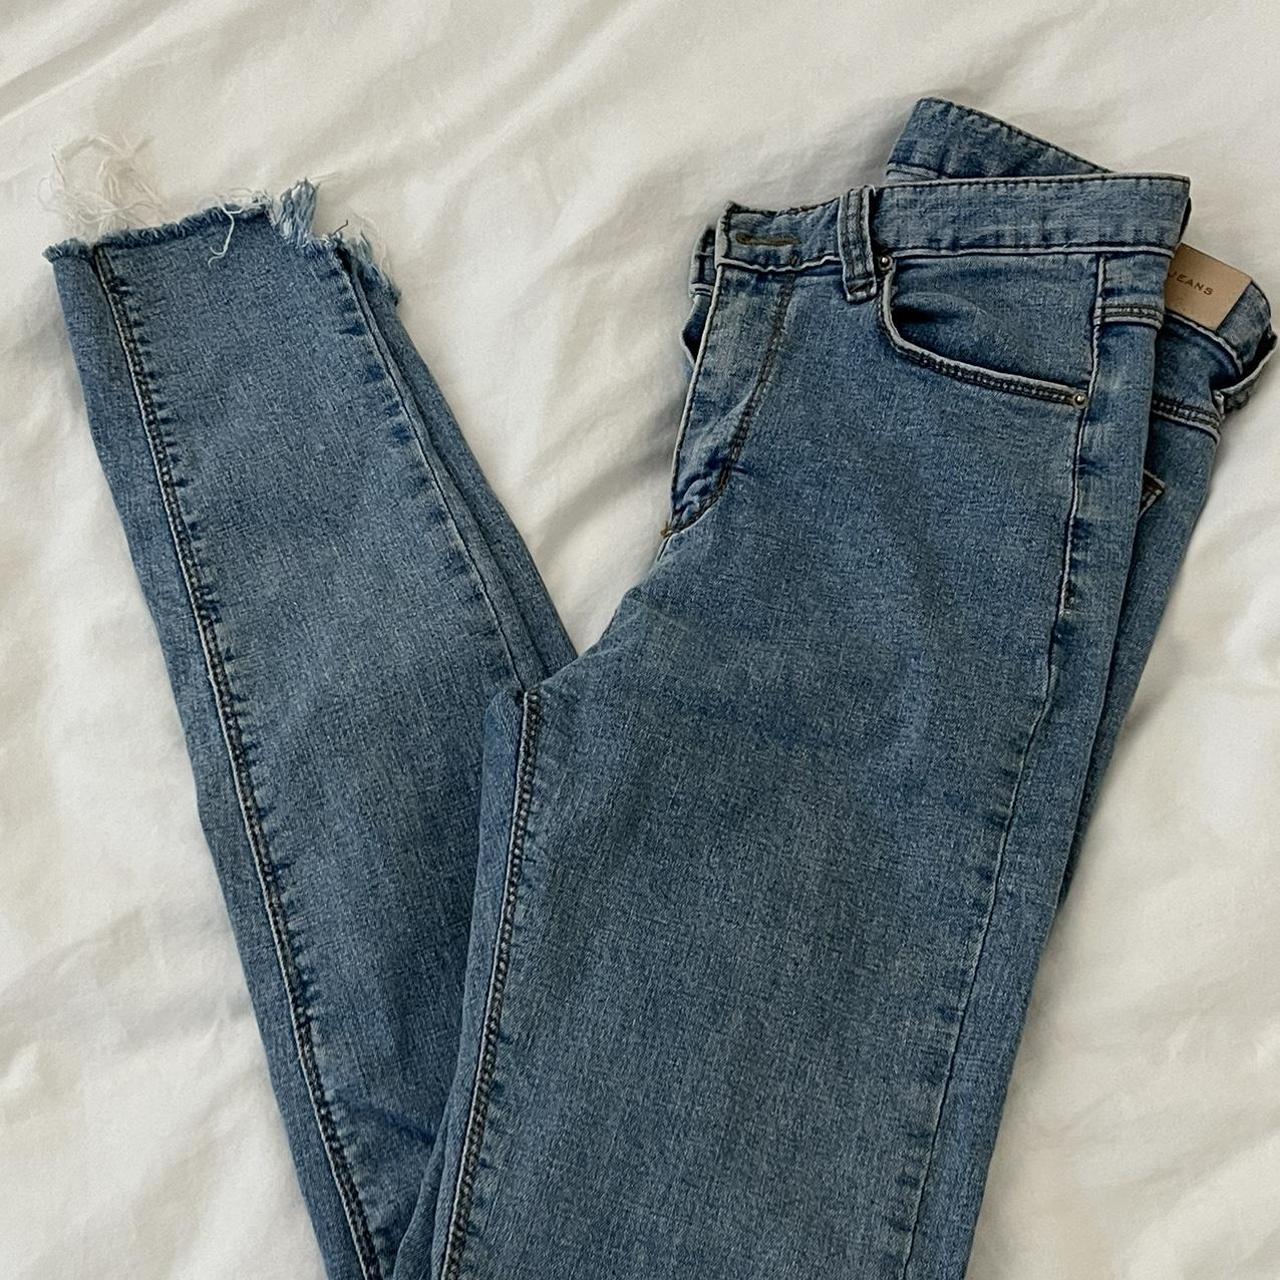 Korean brand Chuu -5kg jeans -bought in Korea -fits... - Depop